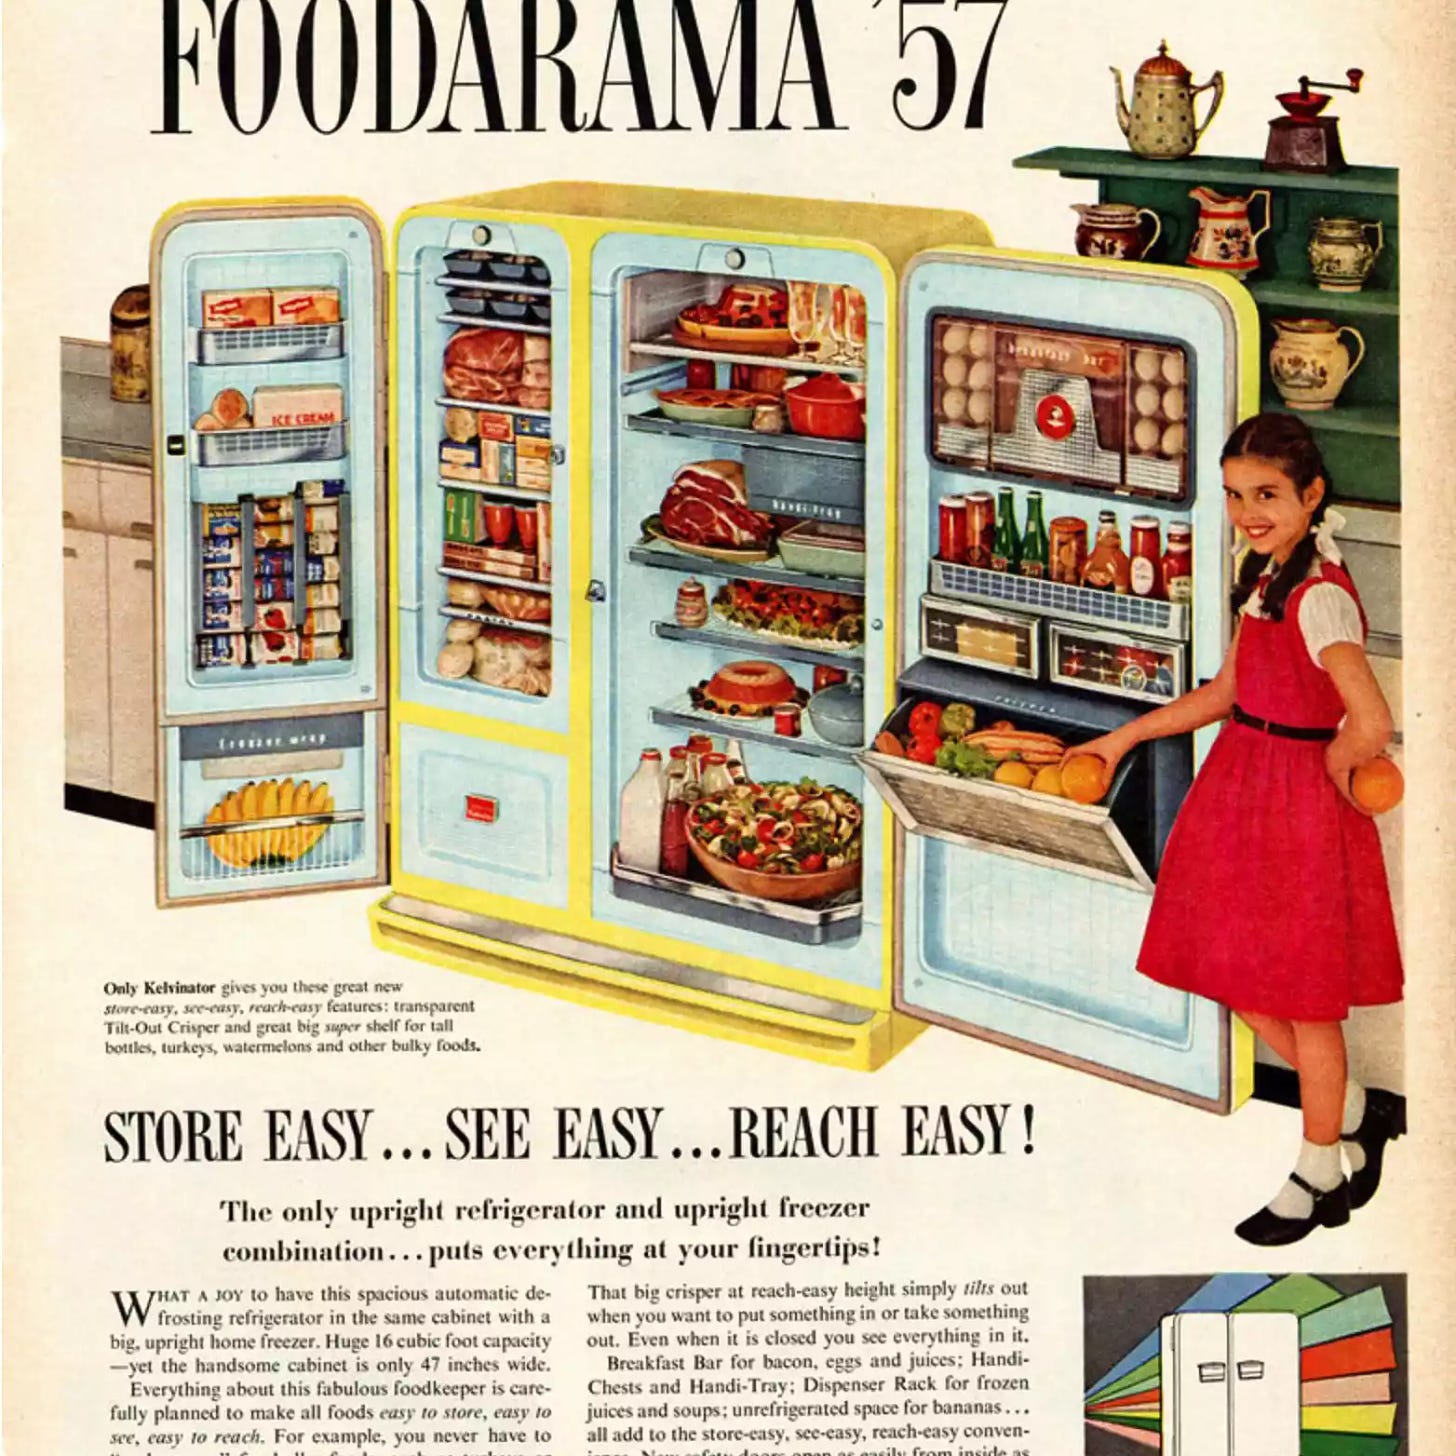 Foodarama-57